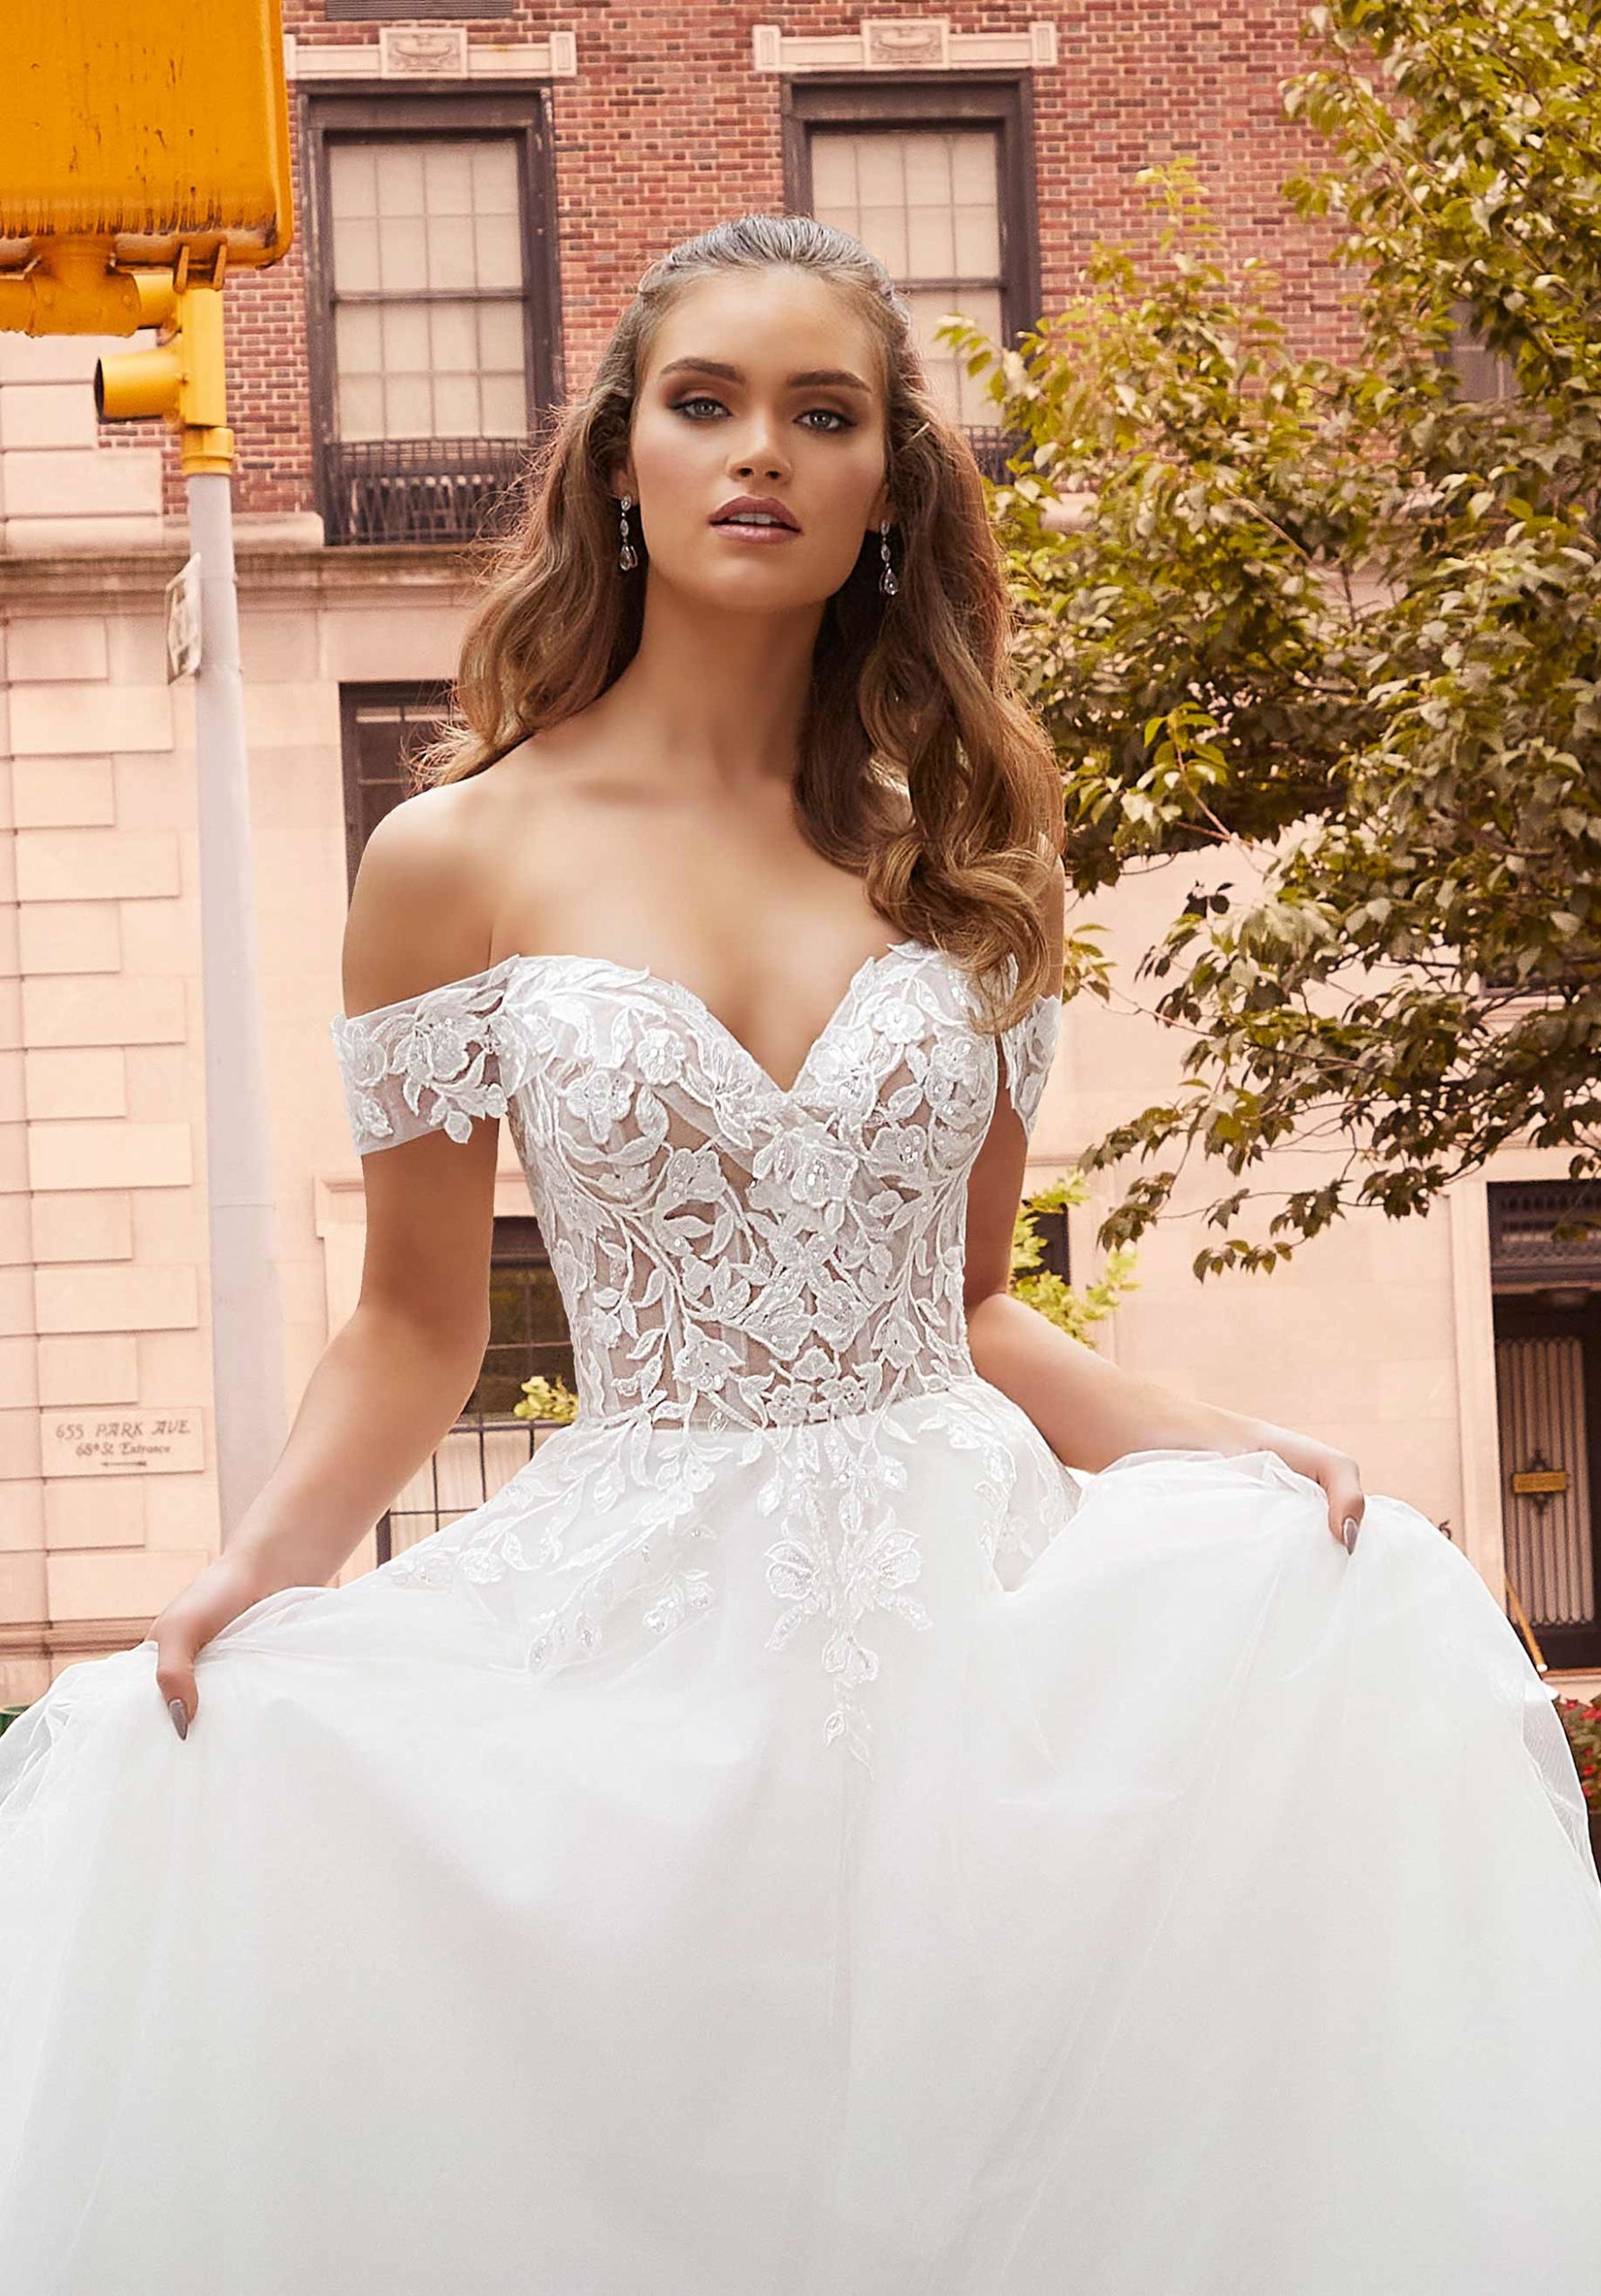 Joaquina wedding dress by Morilee